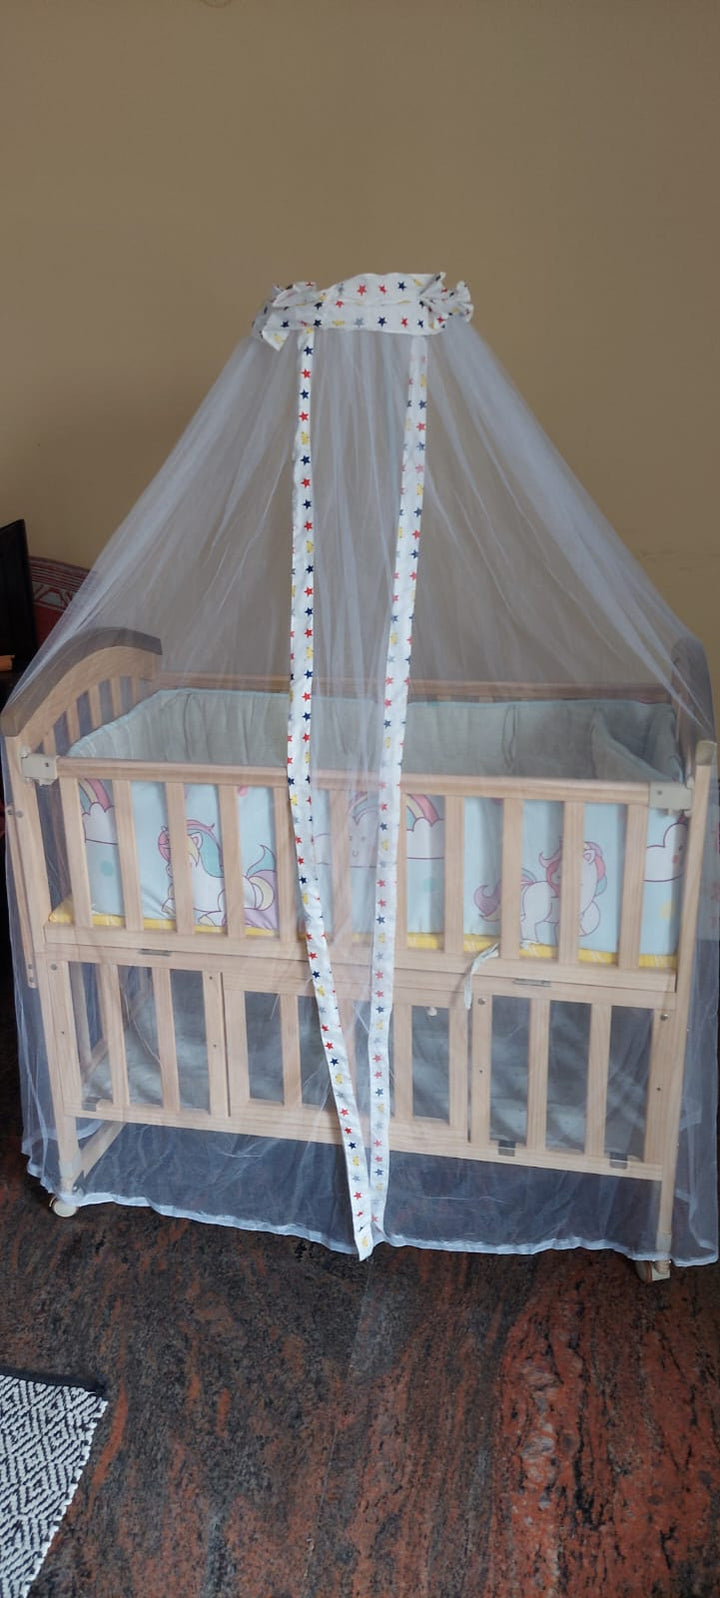 BabyTeddy® 9 in 1 Patented Multifunctional Baby Crib